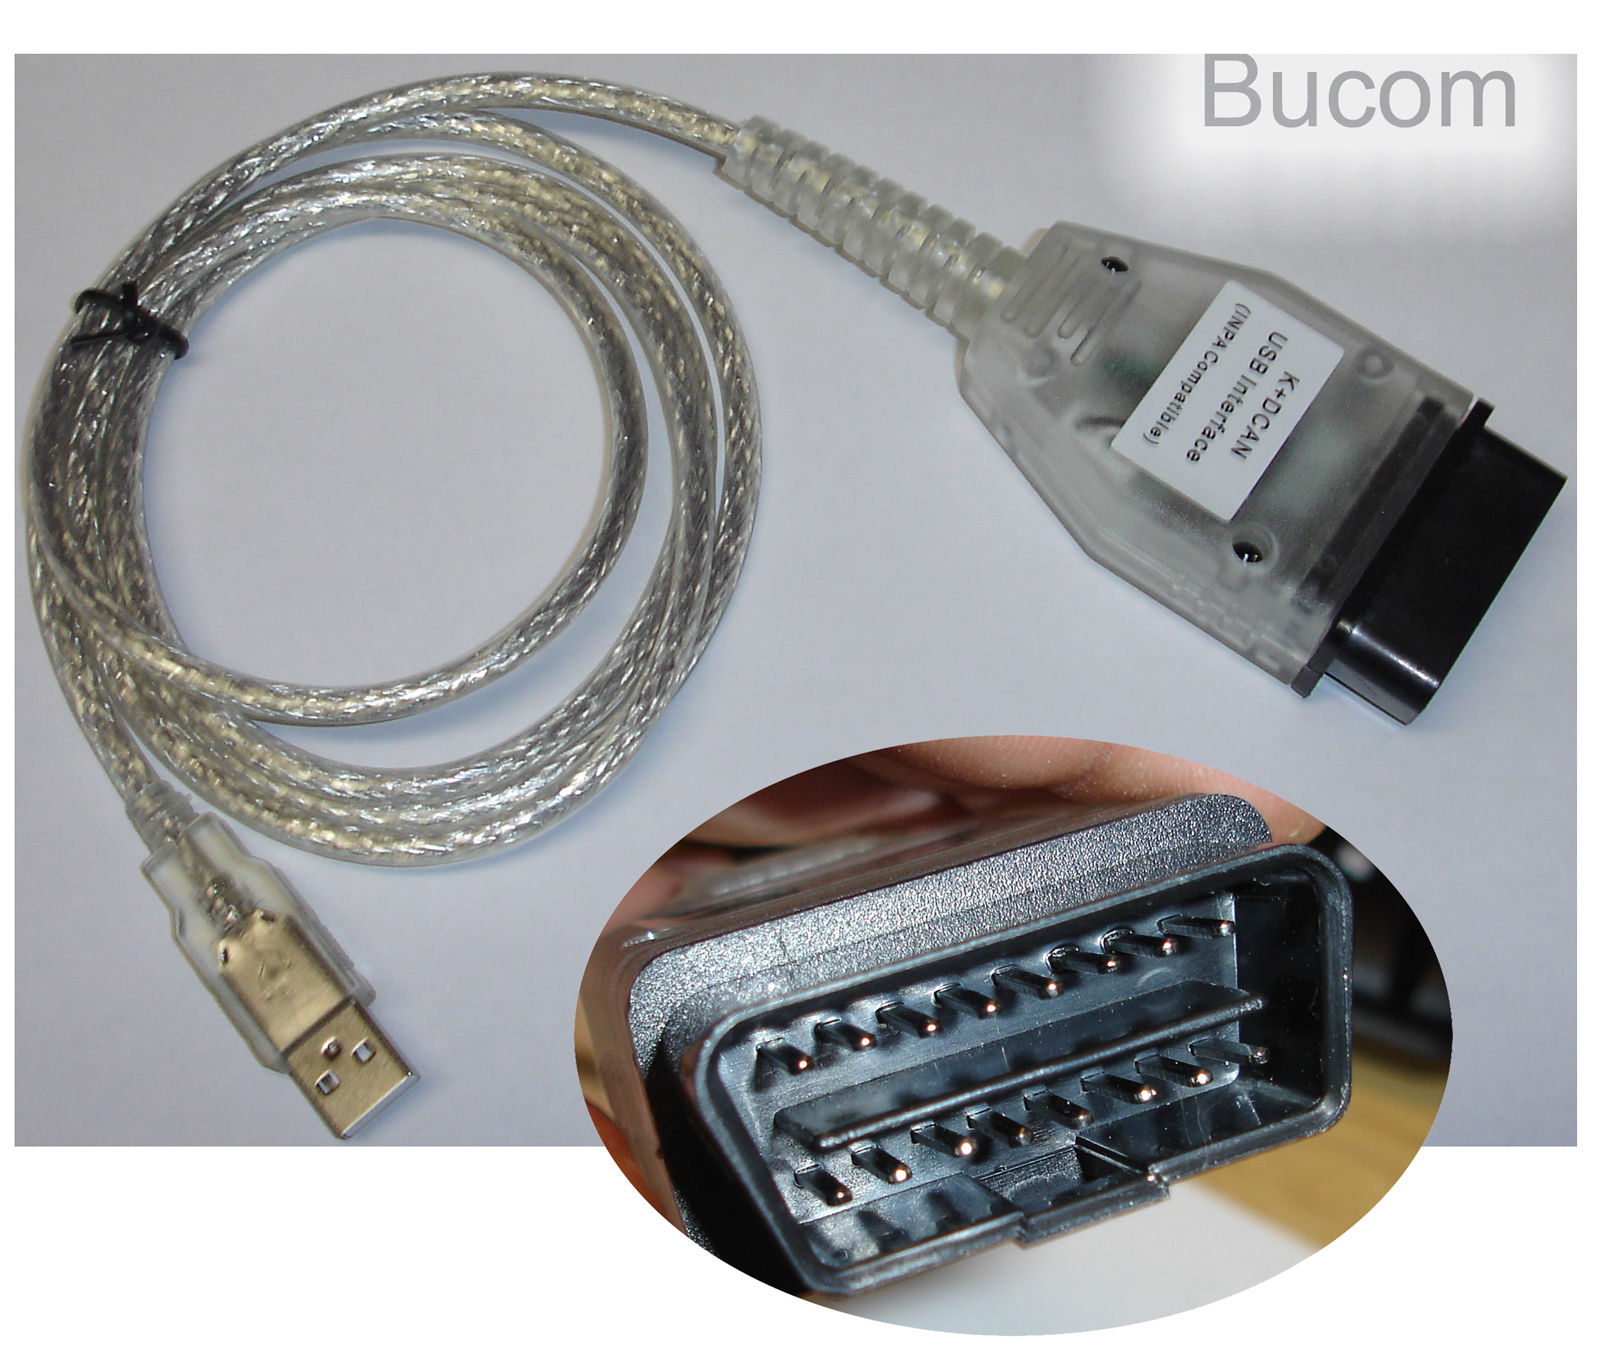 OBD Interface Kabel für BMW EOBD OBDII OBD2 kompatibel mit Carly inkl.  Adapter für Handy